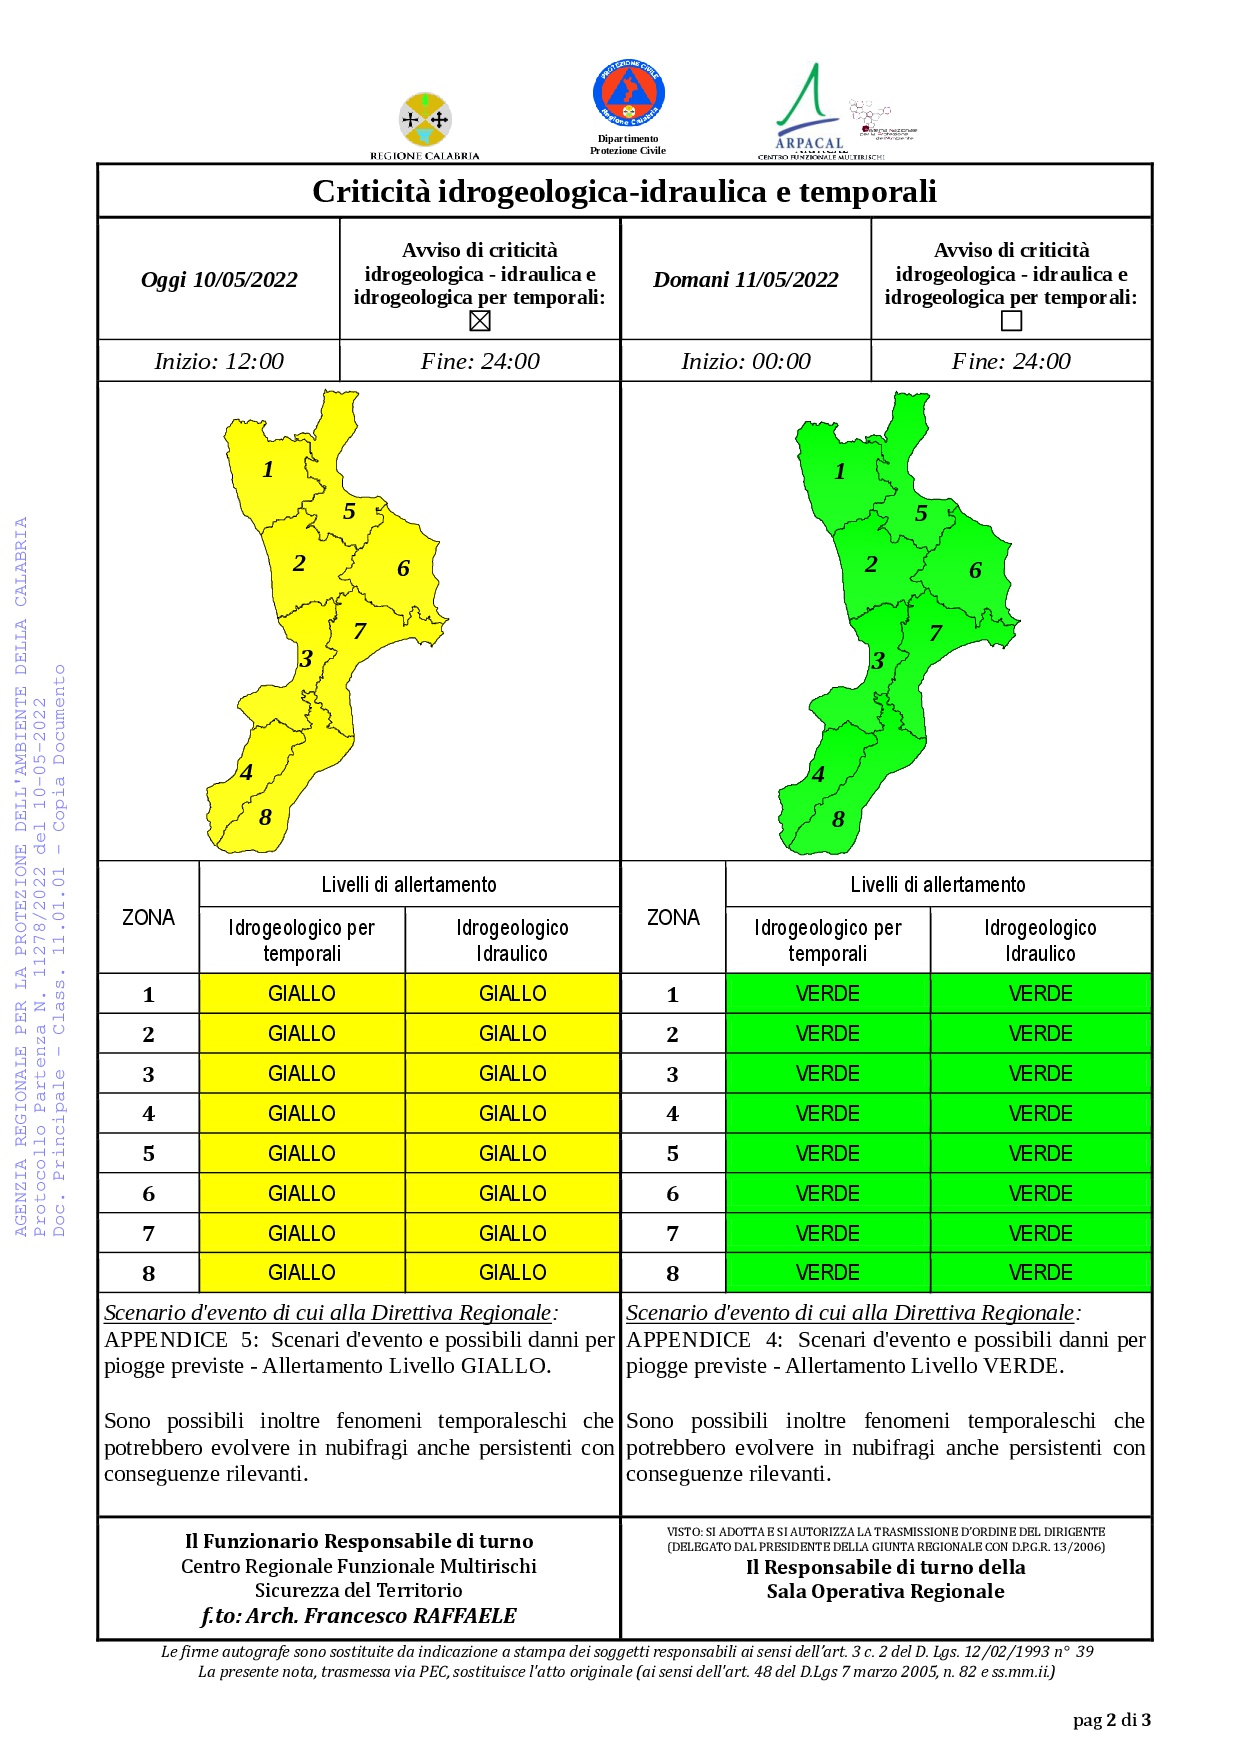 Criticità idrogeologica-idraulica e temporali in Calabria 10-05-2022